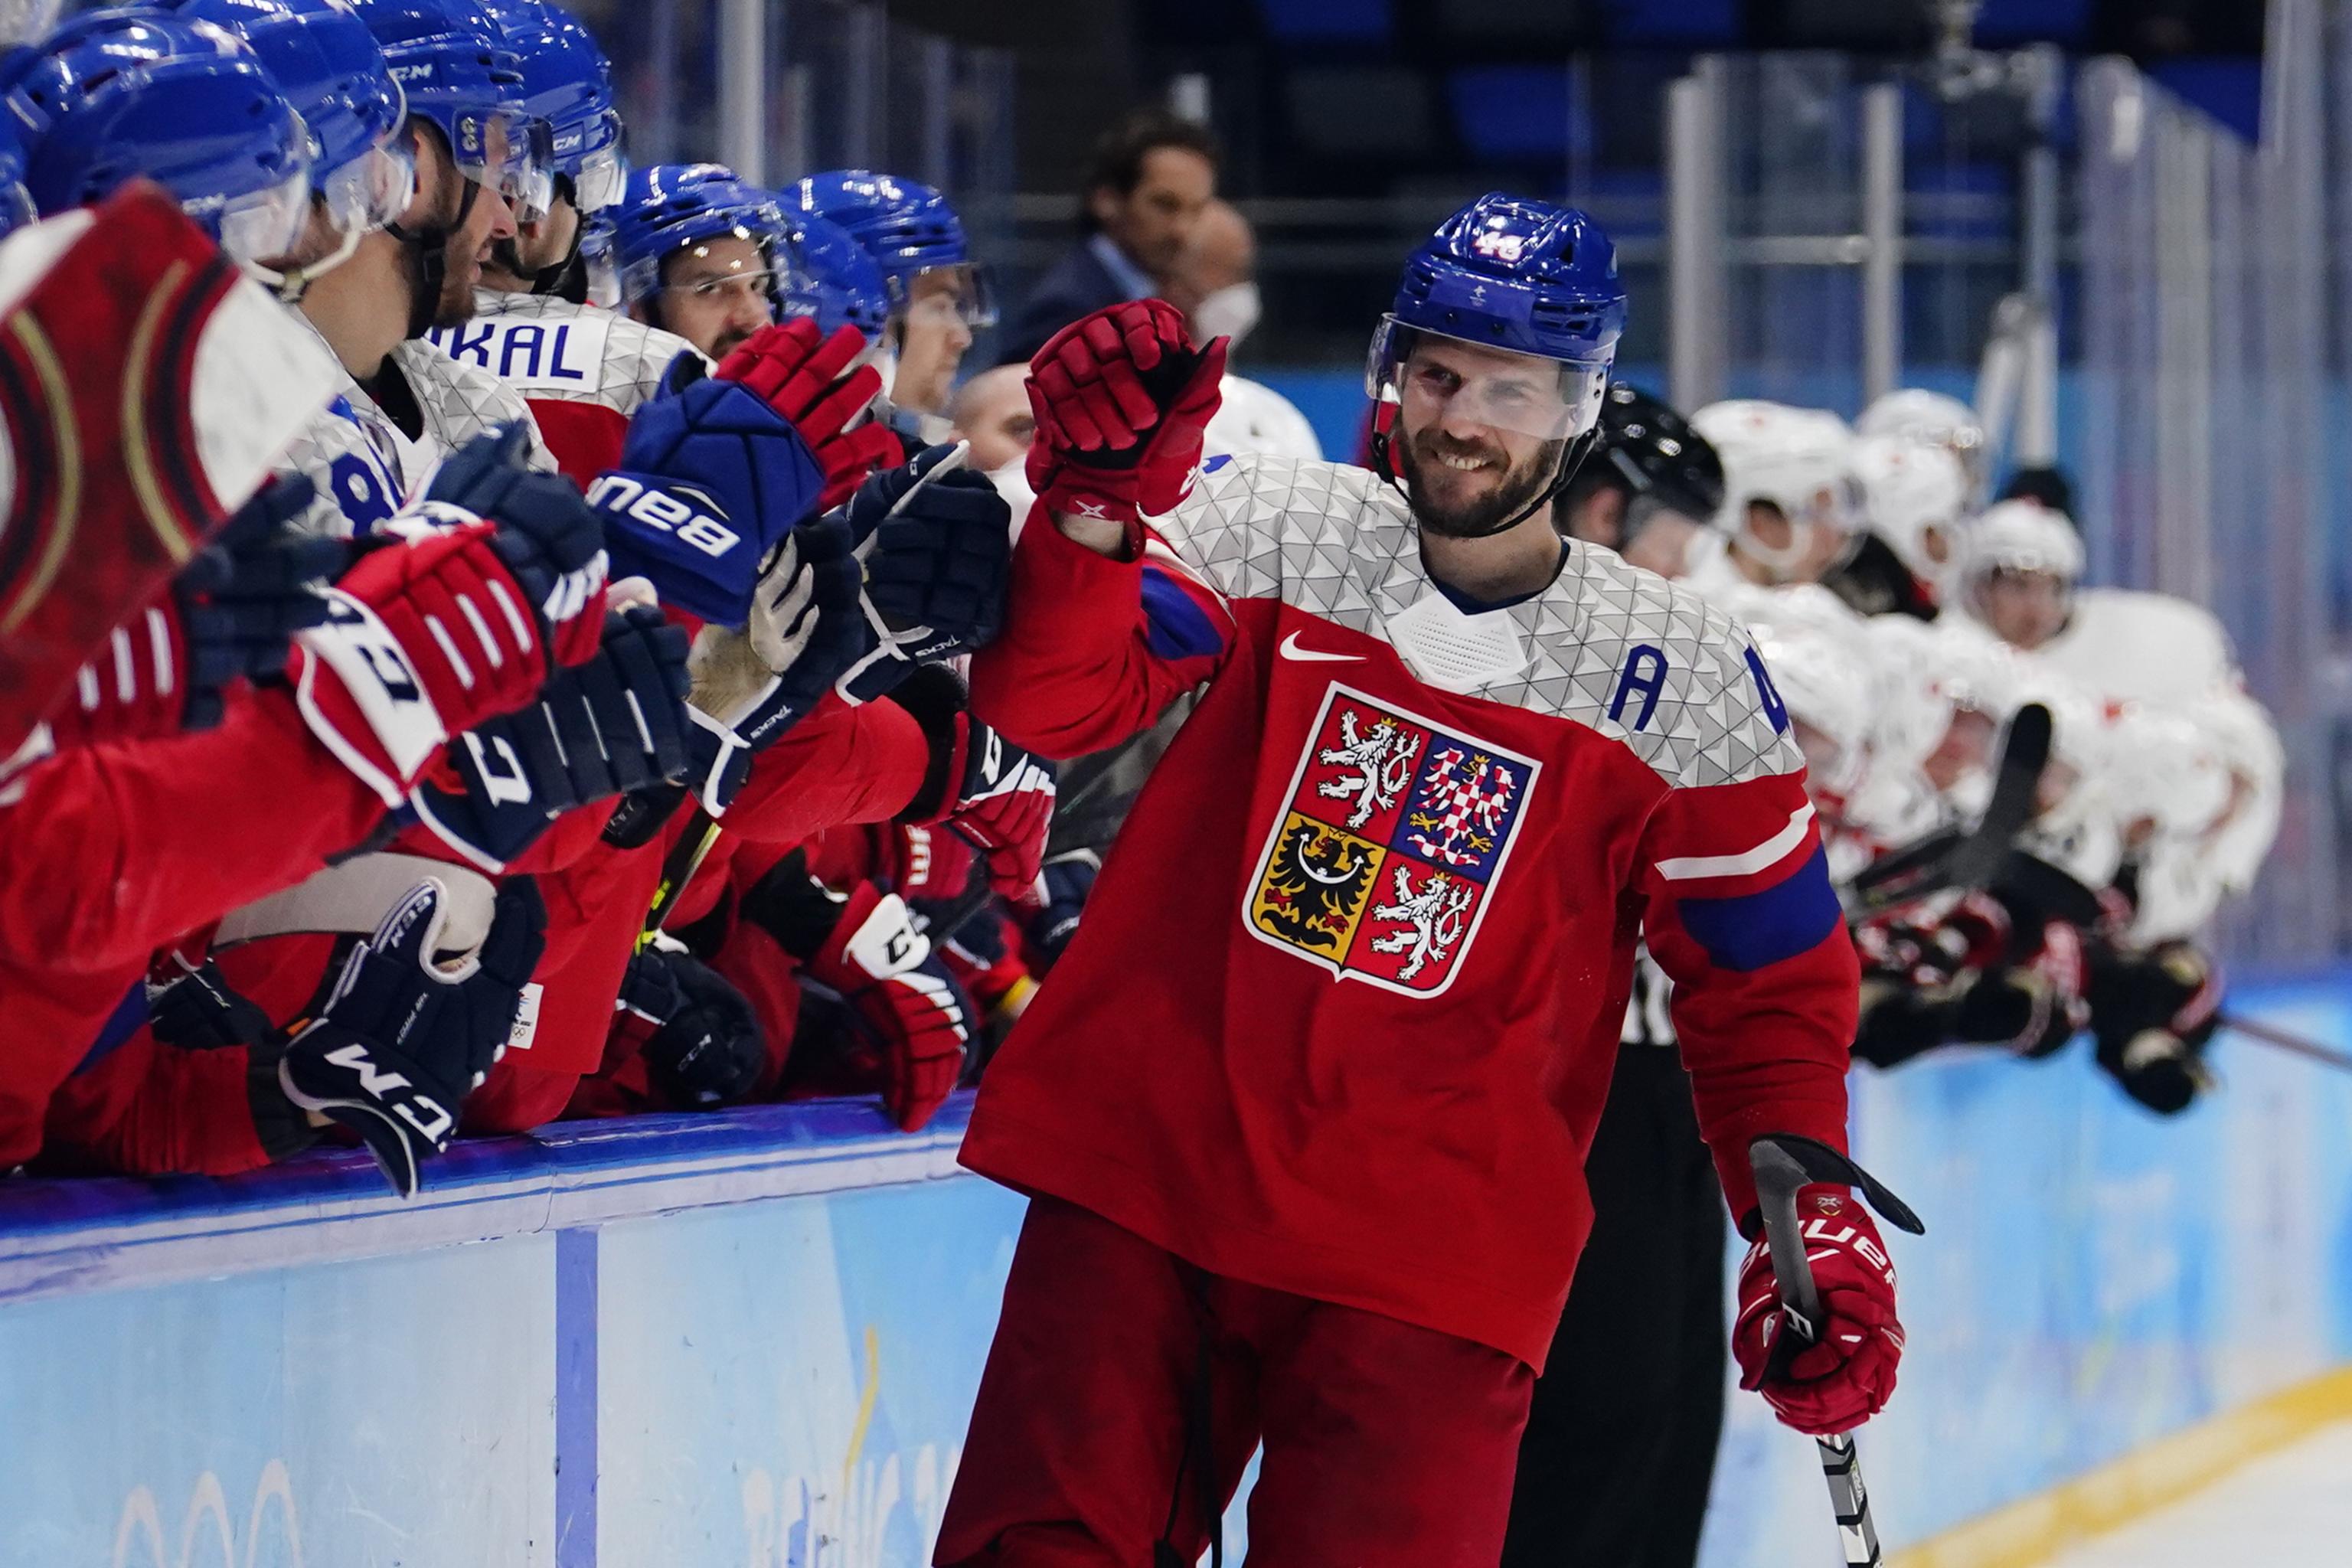 Denmark Wins Olympic Debut Over Czech Republic - The Hockey News